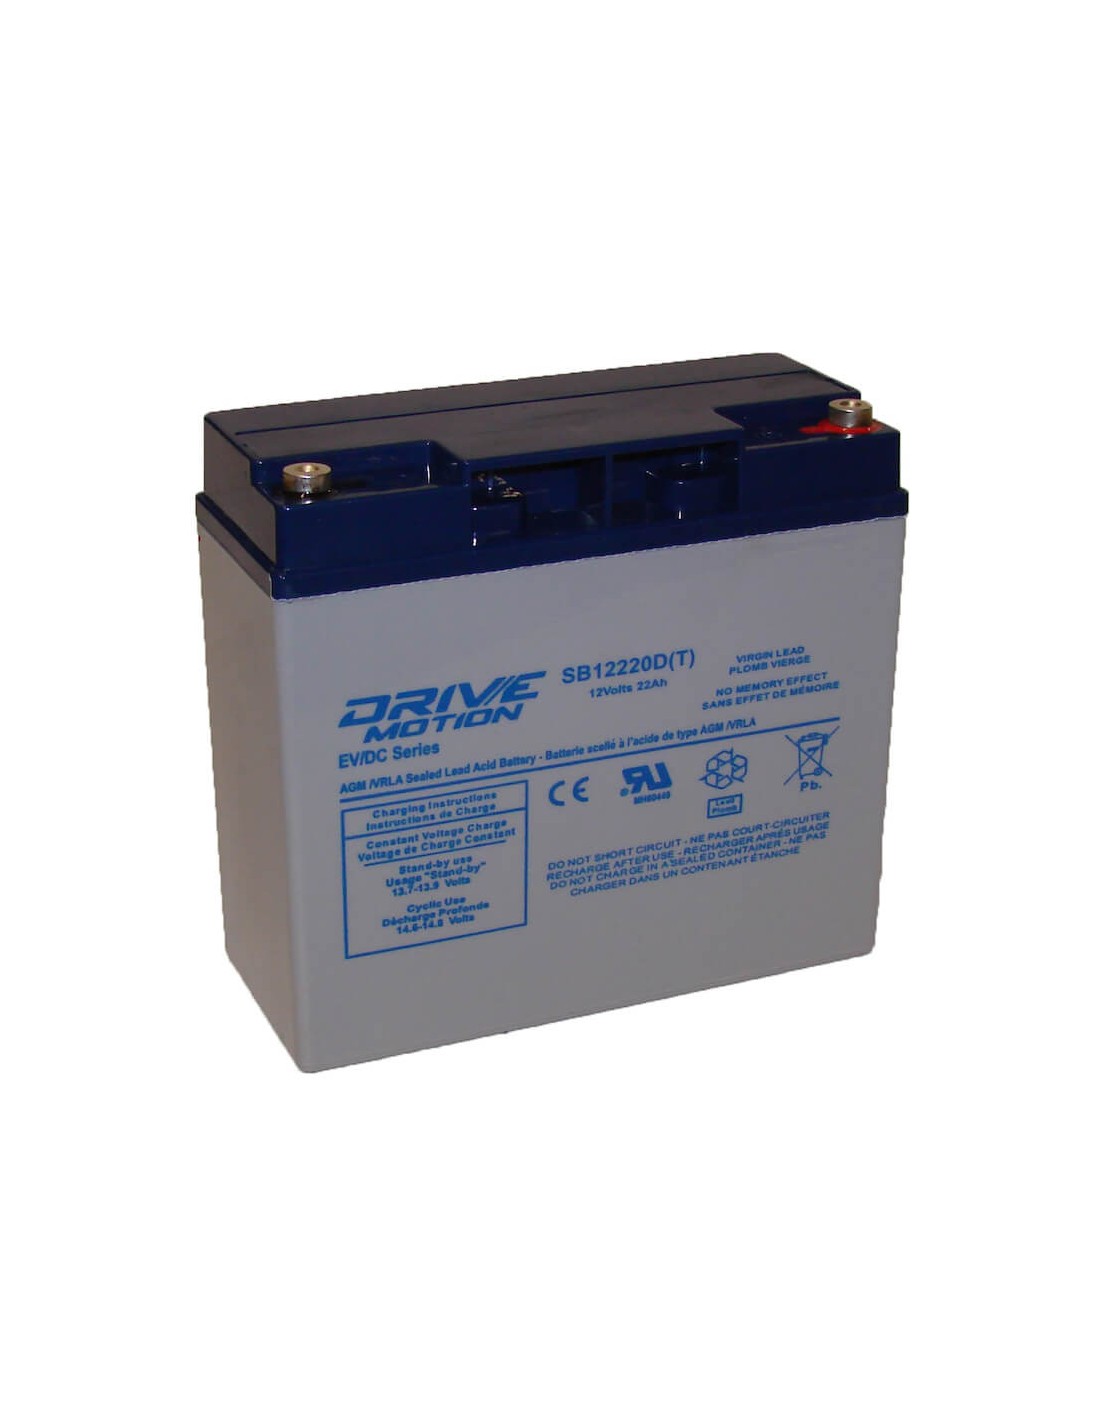 60V 20Ah eBike Battery Set - 12V 20Ah - 6-DZM-20